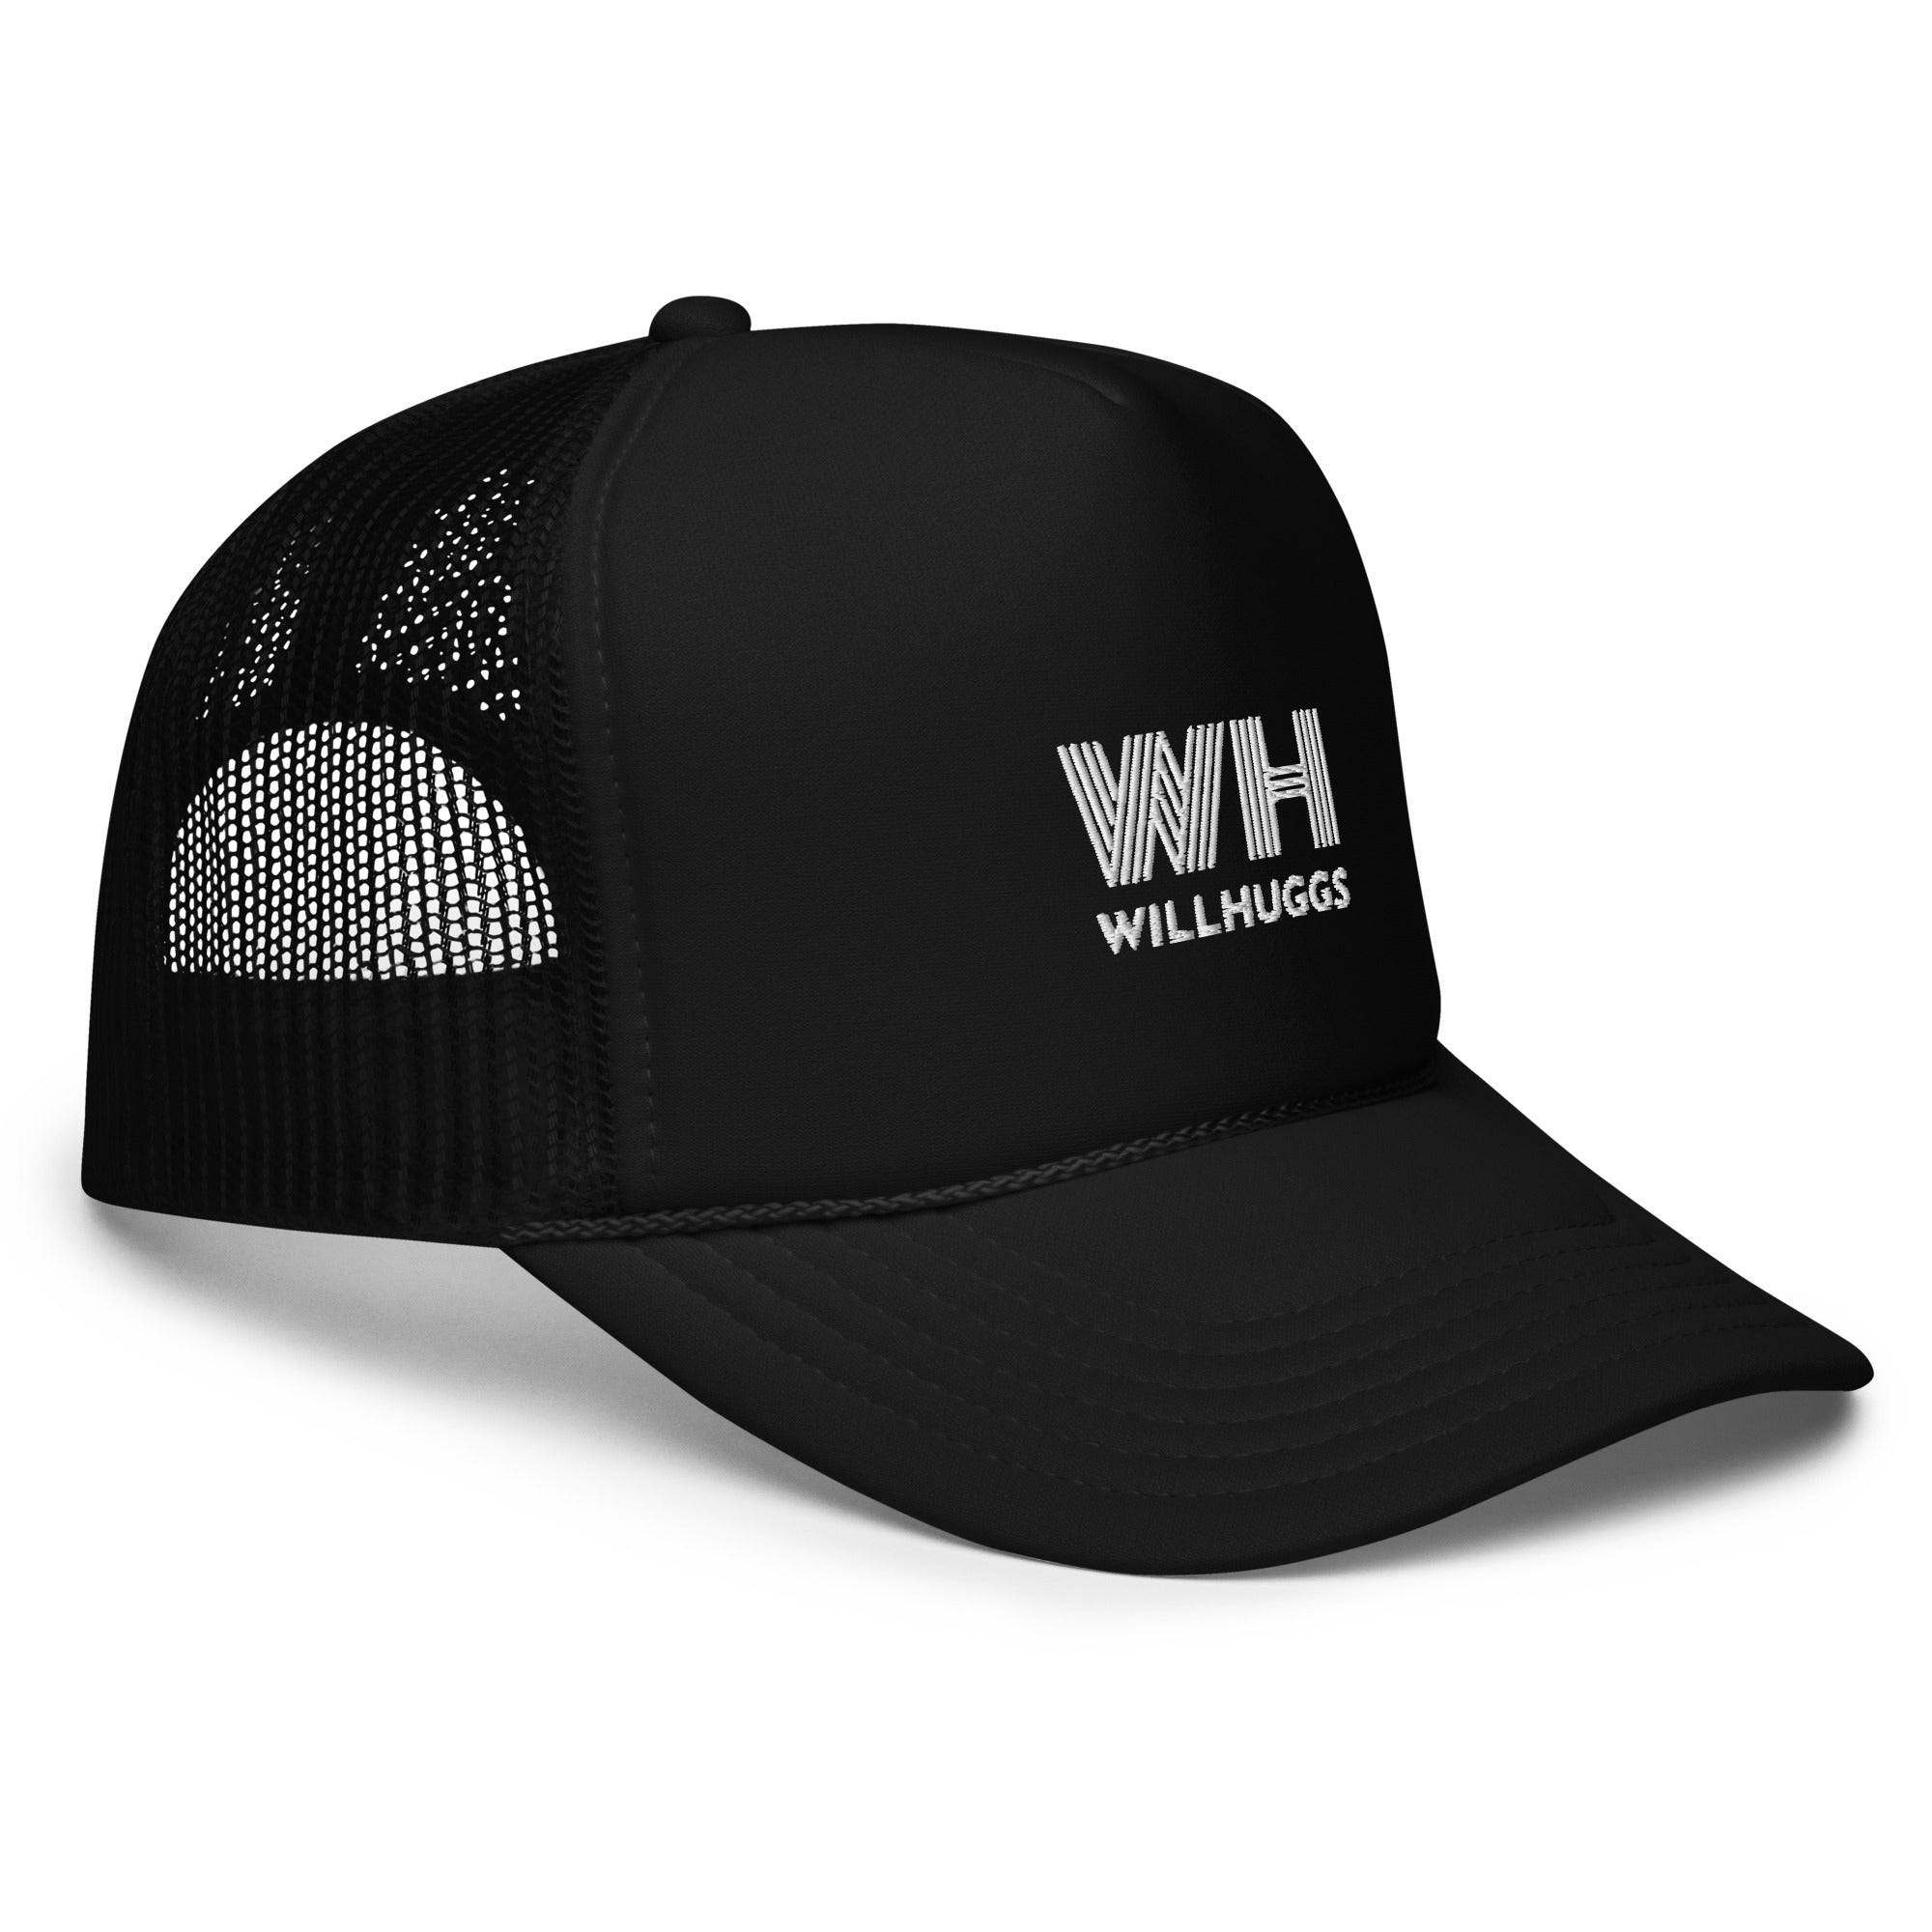 WillHuggs Logo Foam Trucker Hat